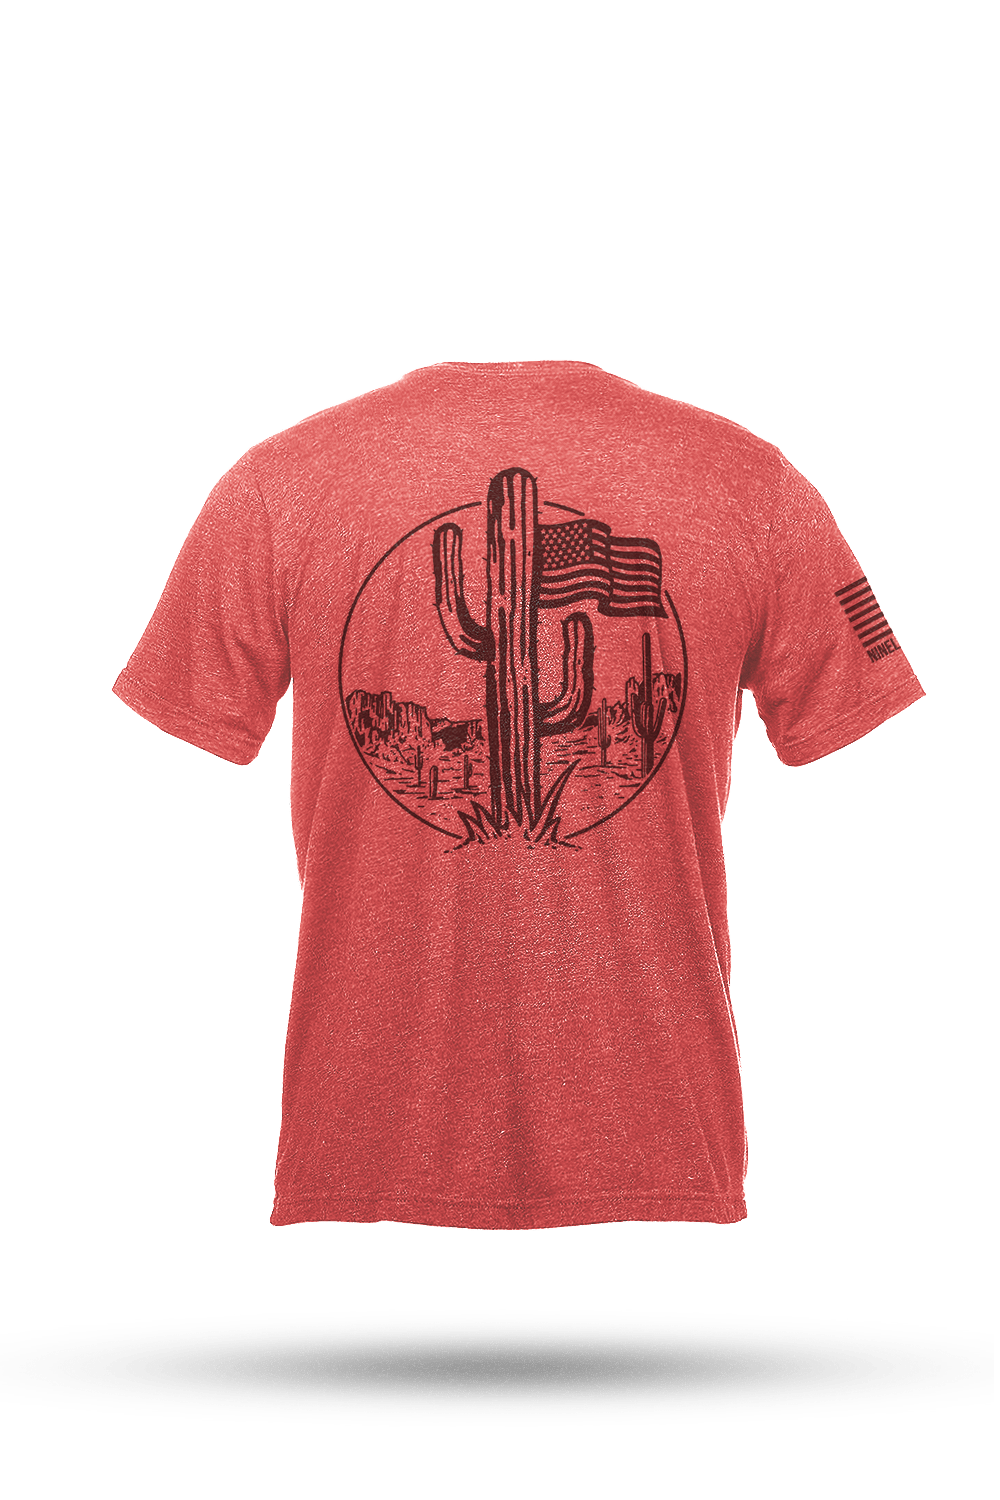 Youth T-Shirt - Cactus Flag